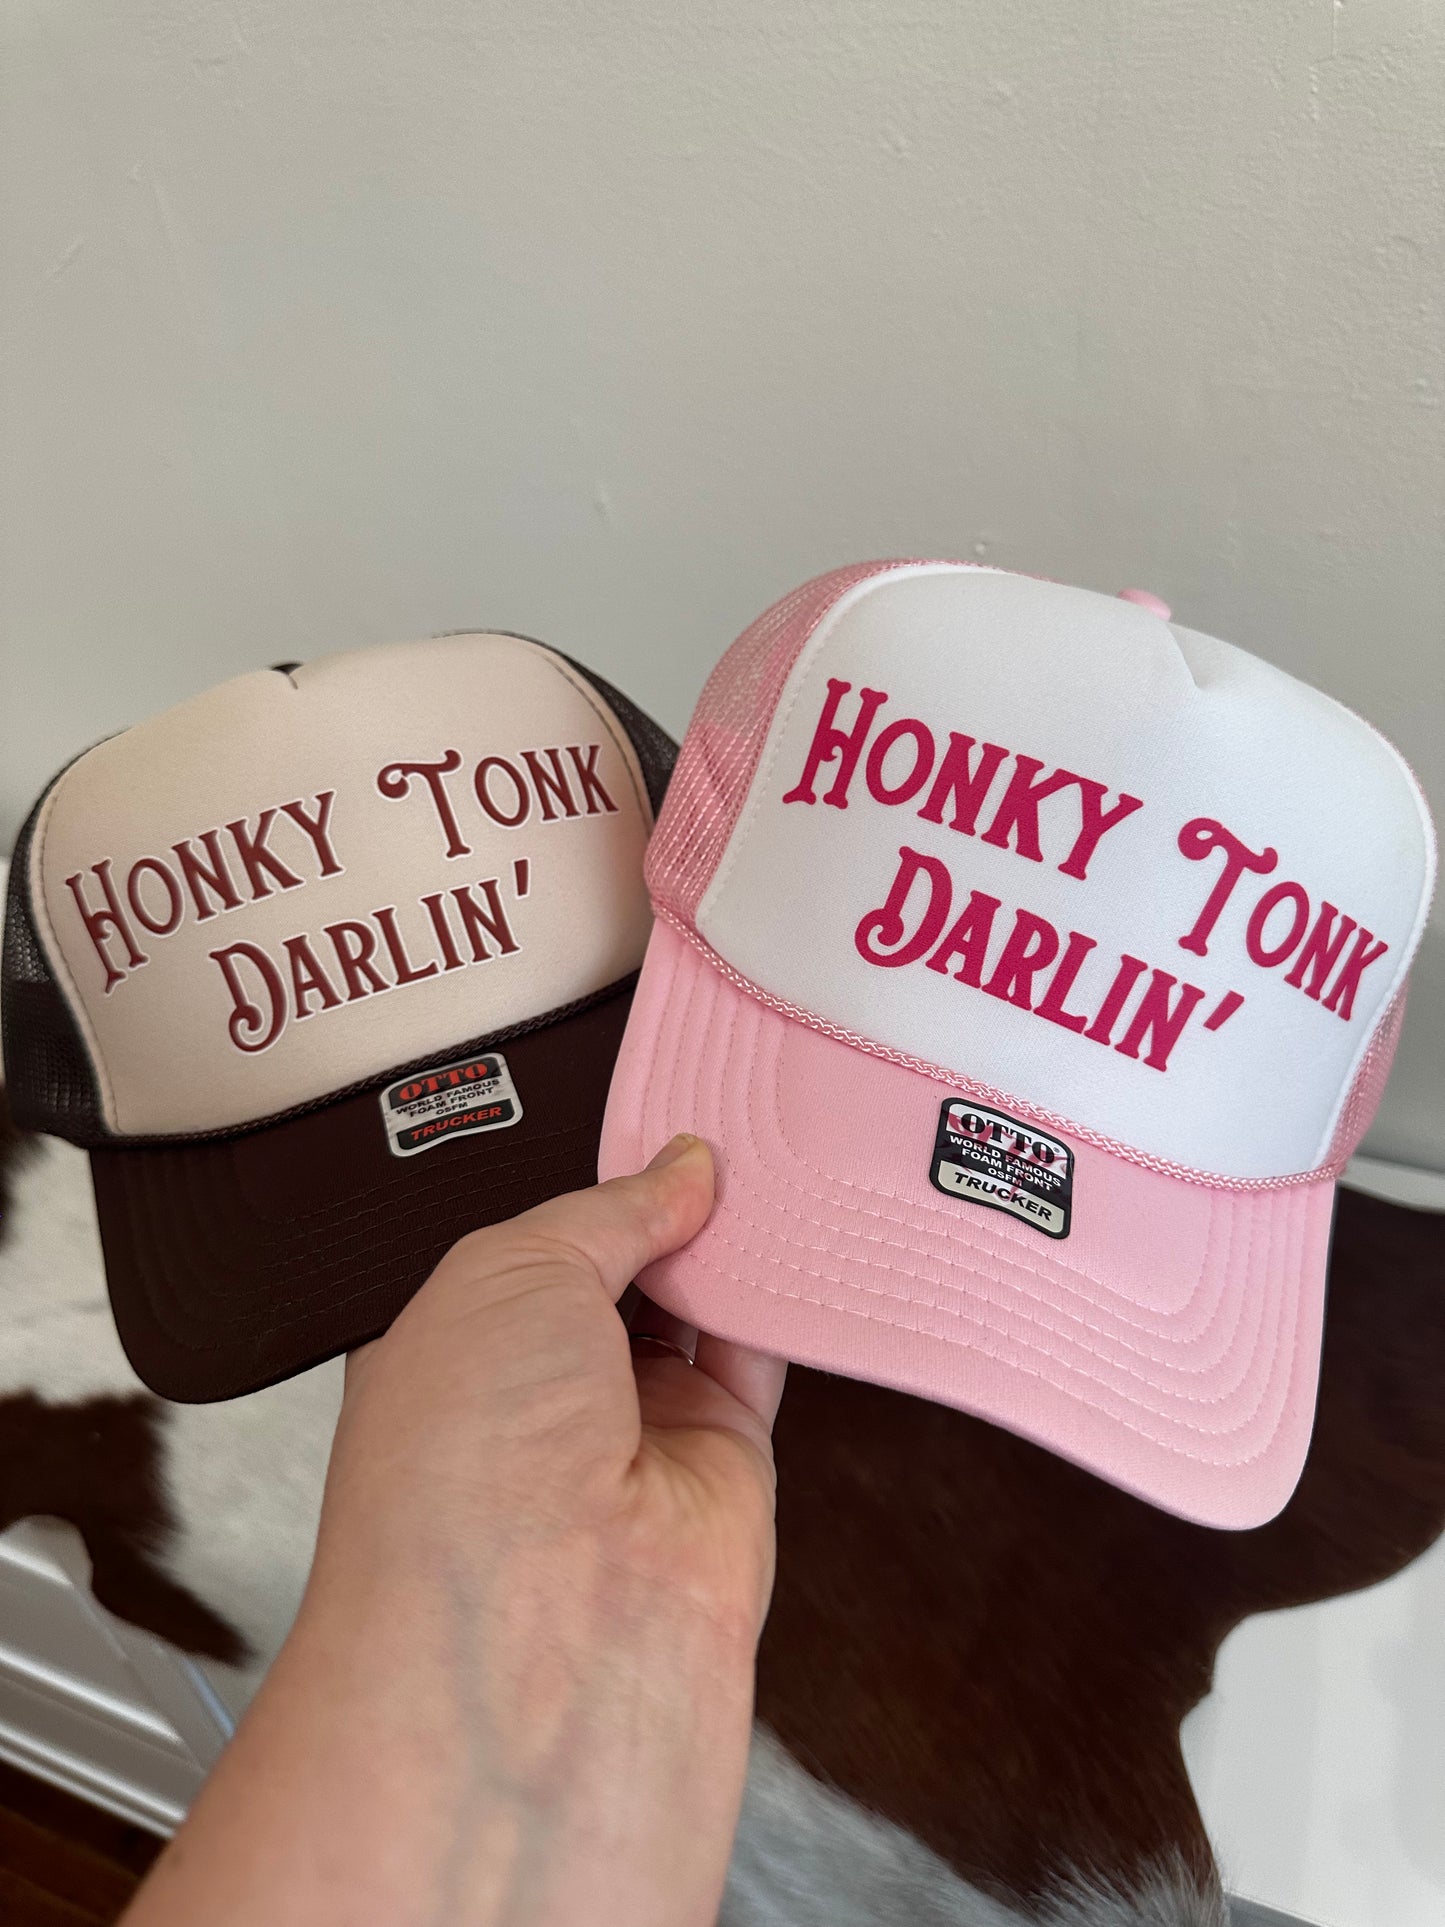 Honky Tonk Darlin' Hats